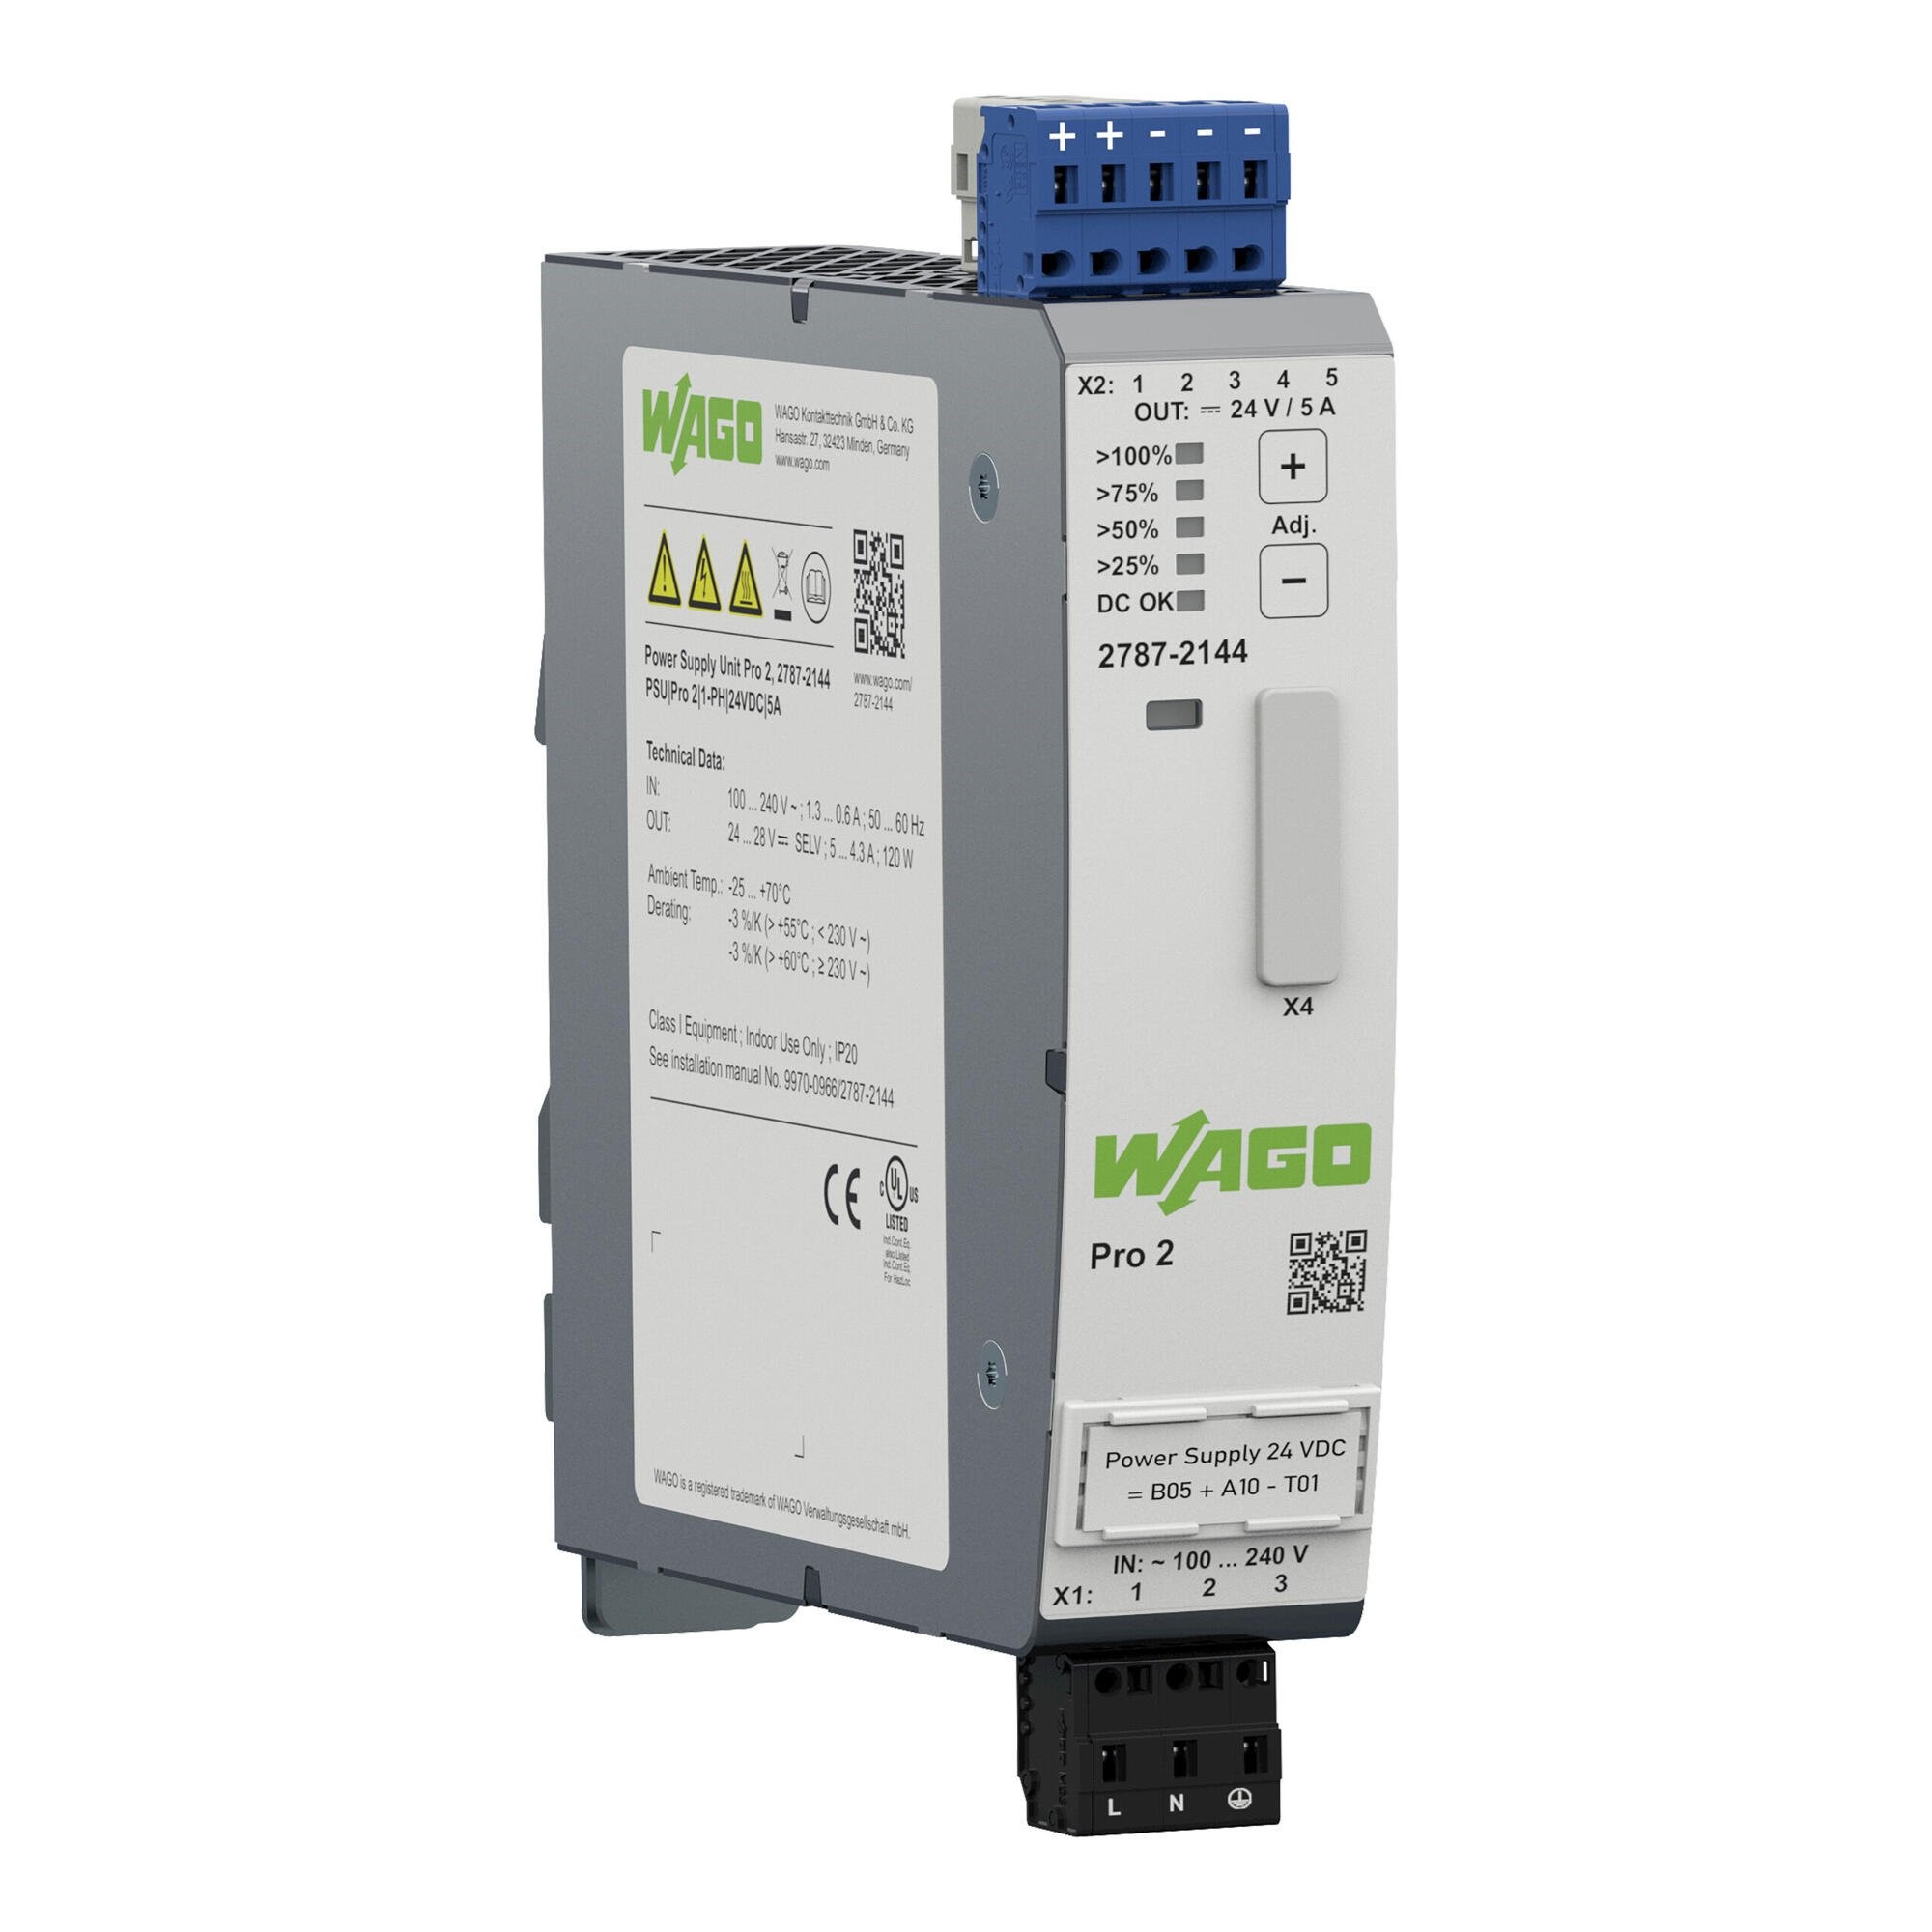 WAGO Power Supply; Pro 2; 1-phase; 24VDC; 5A